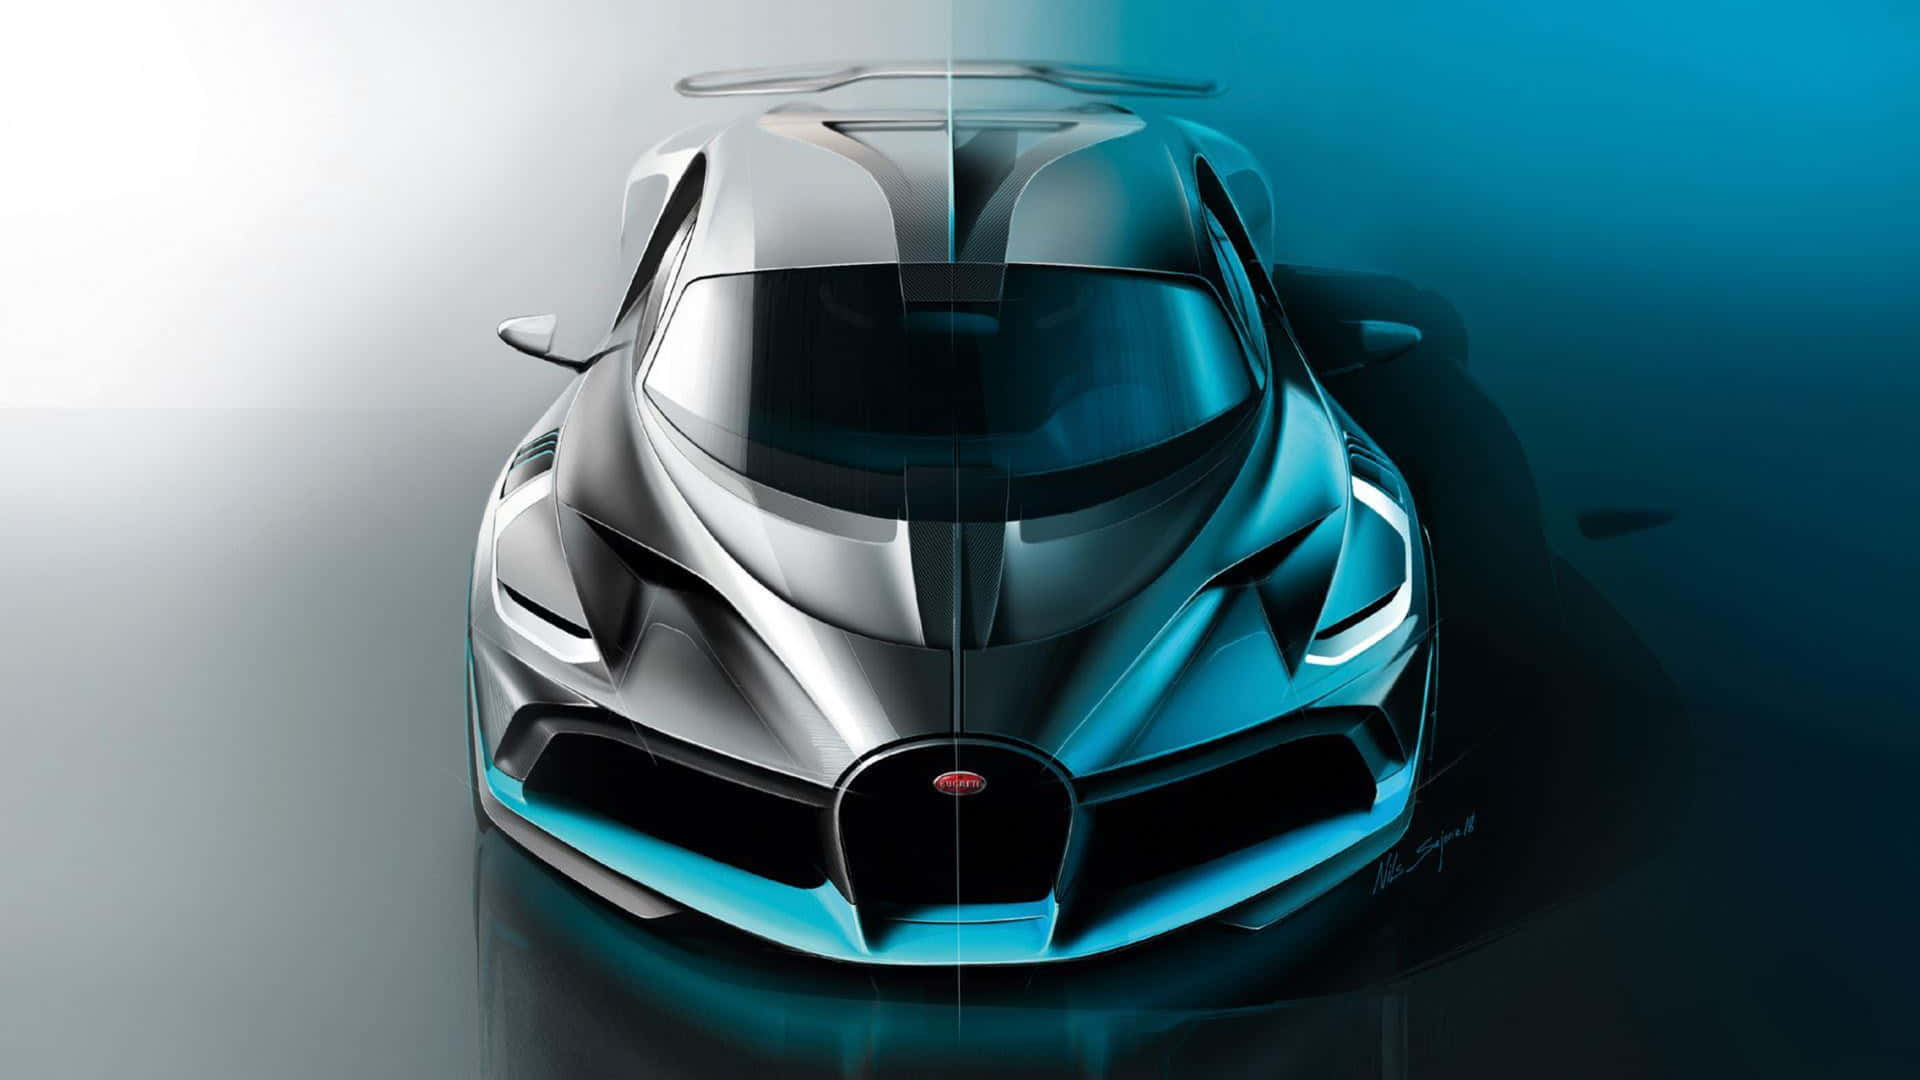 Inswedish: Bakgrundsbild På Bugatti Chiron-konceptbilen. Wallpaper